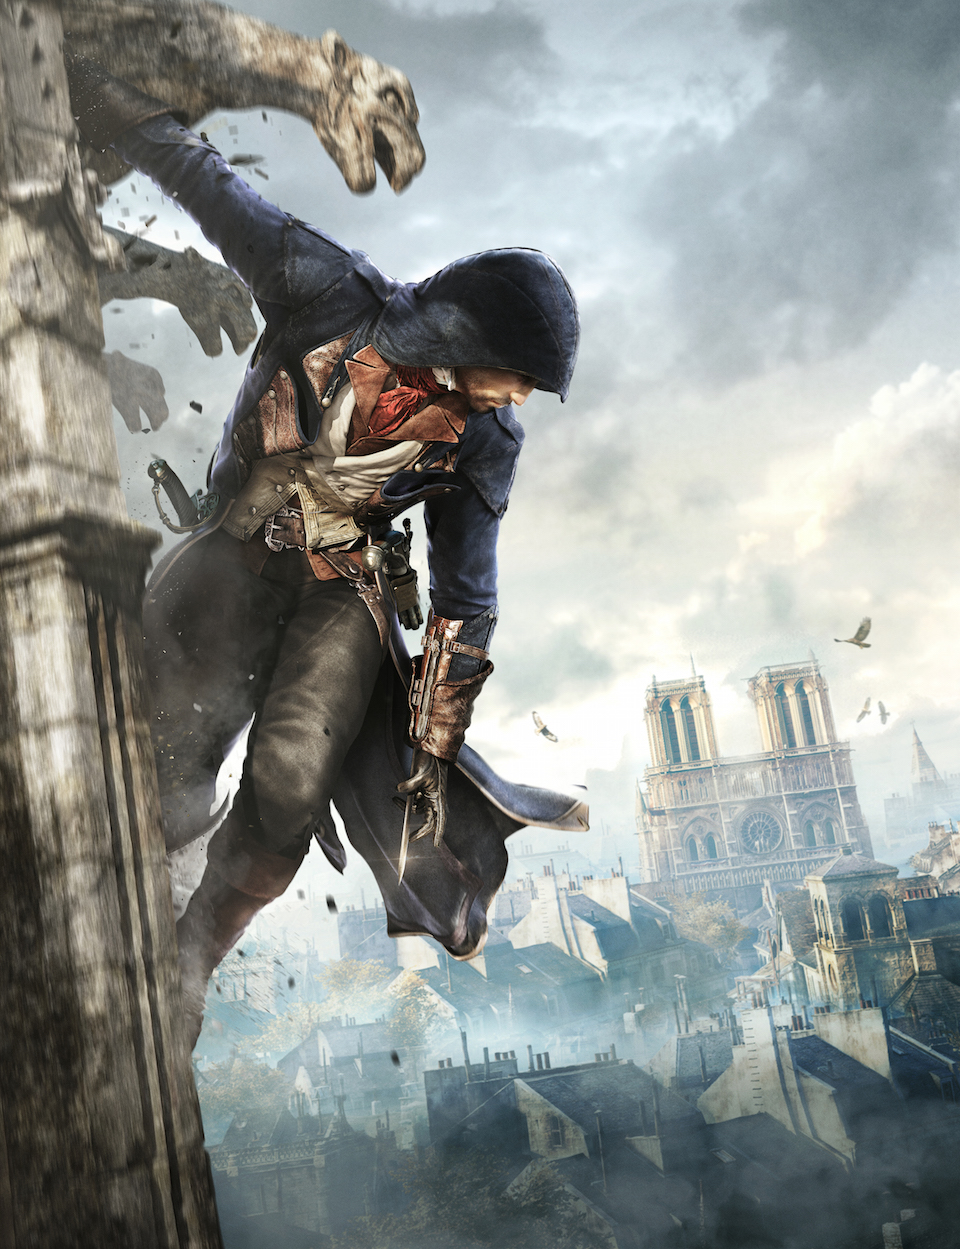 Assassin's Creed Unity Wallpaper by DanteArtWallpapers on DeviantArt